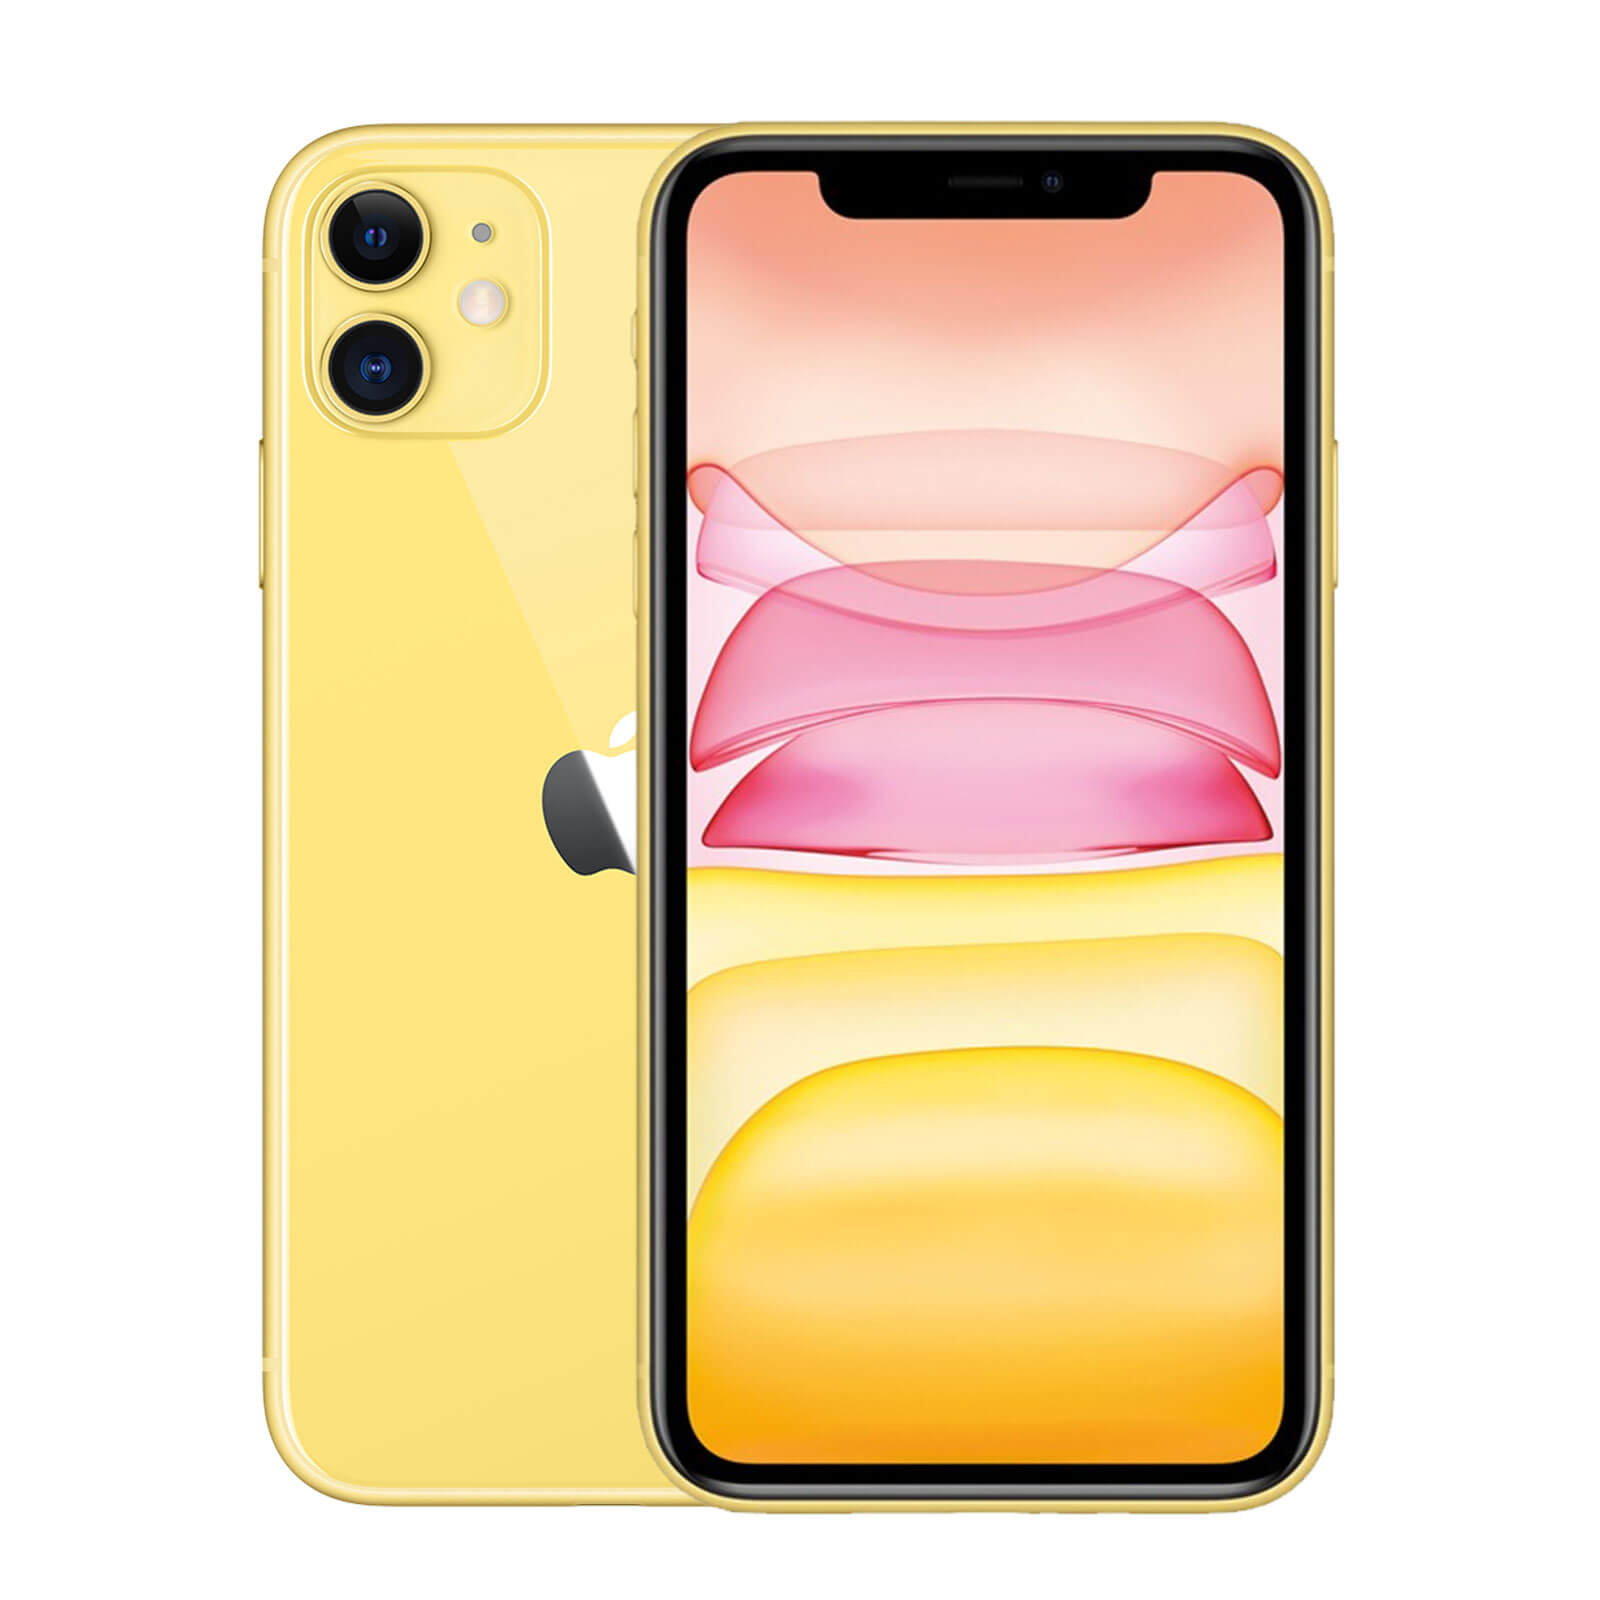 Apple iPhone 11 128GB Yellow Good - AT&T